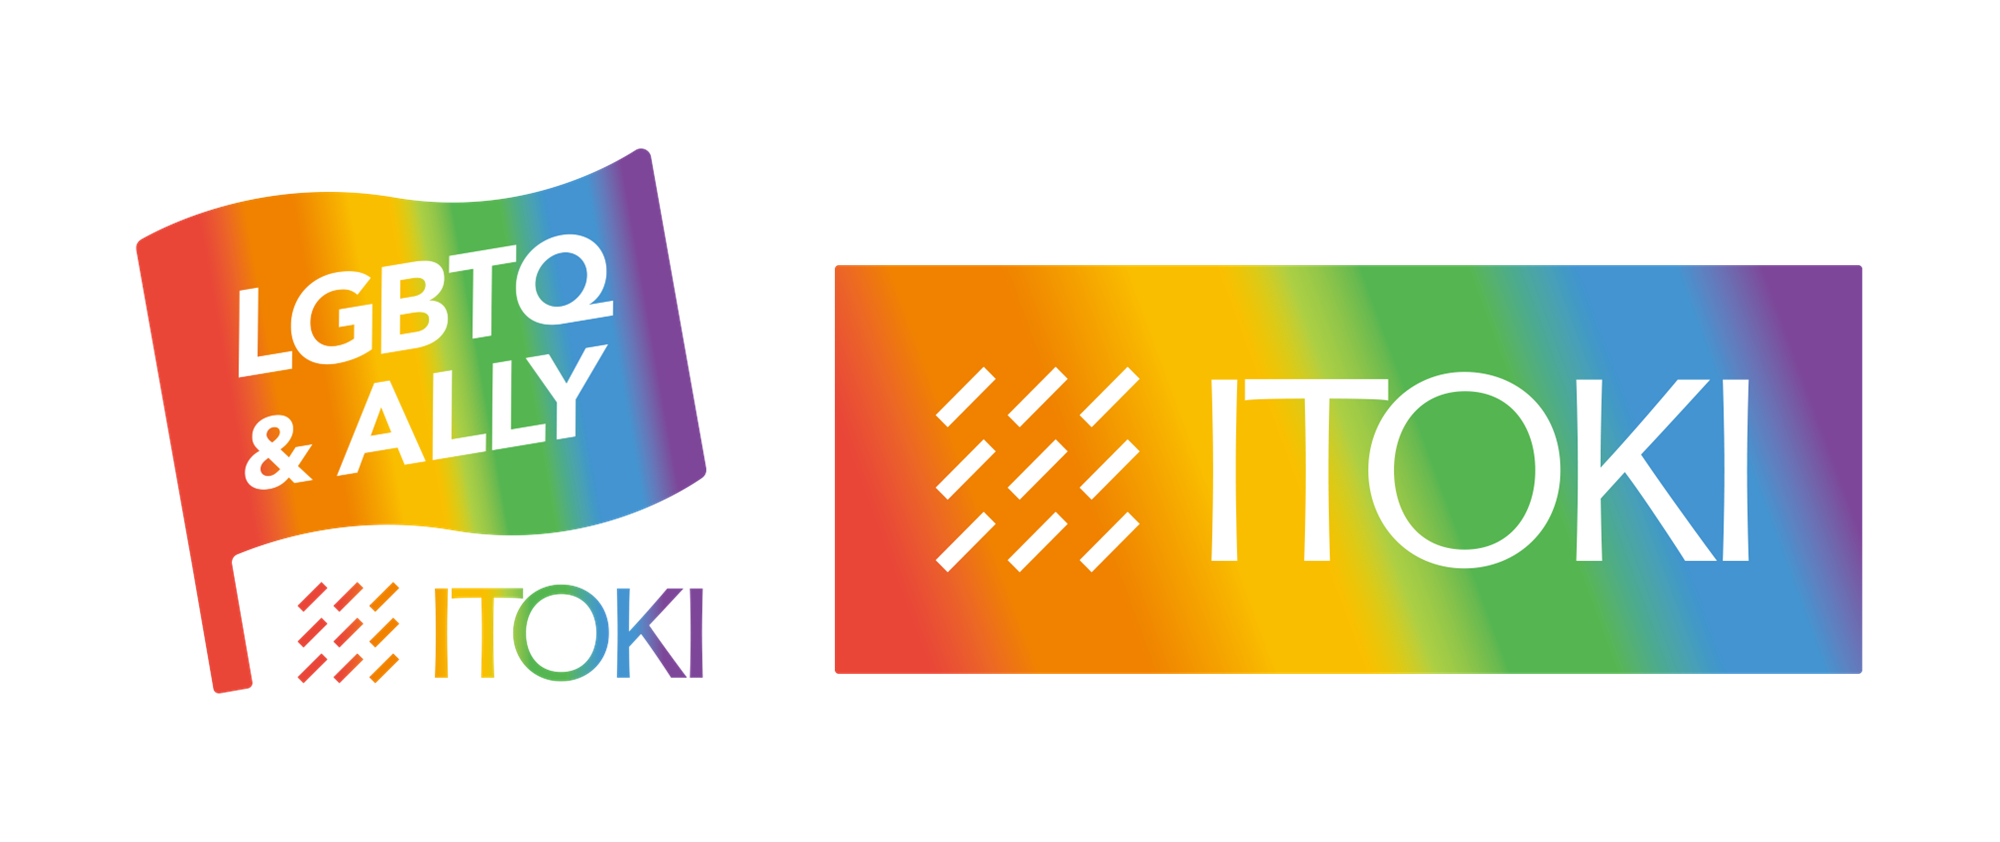 Original LGBTQ ally mark/corporate logo